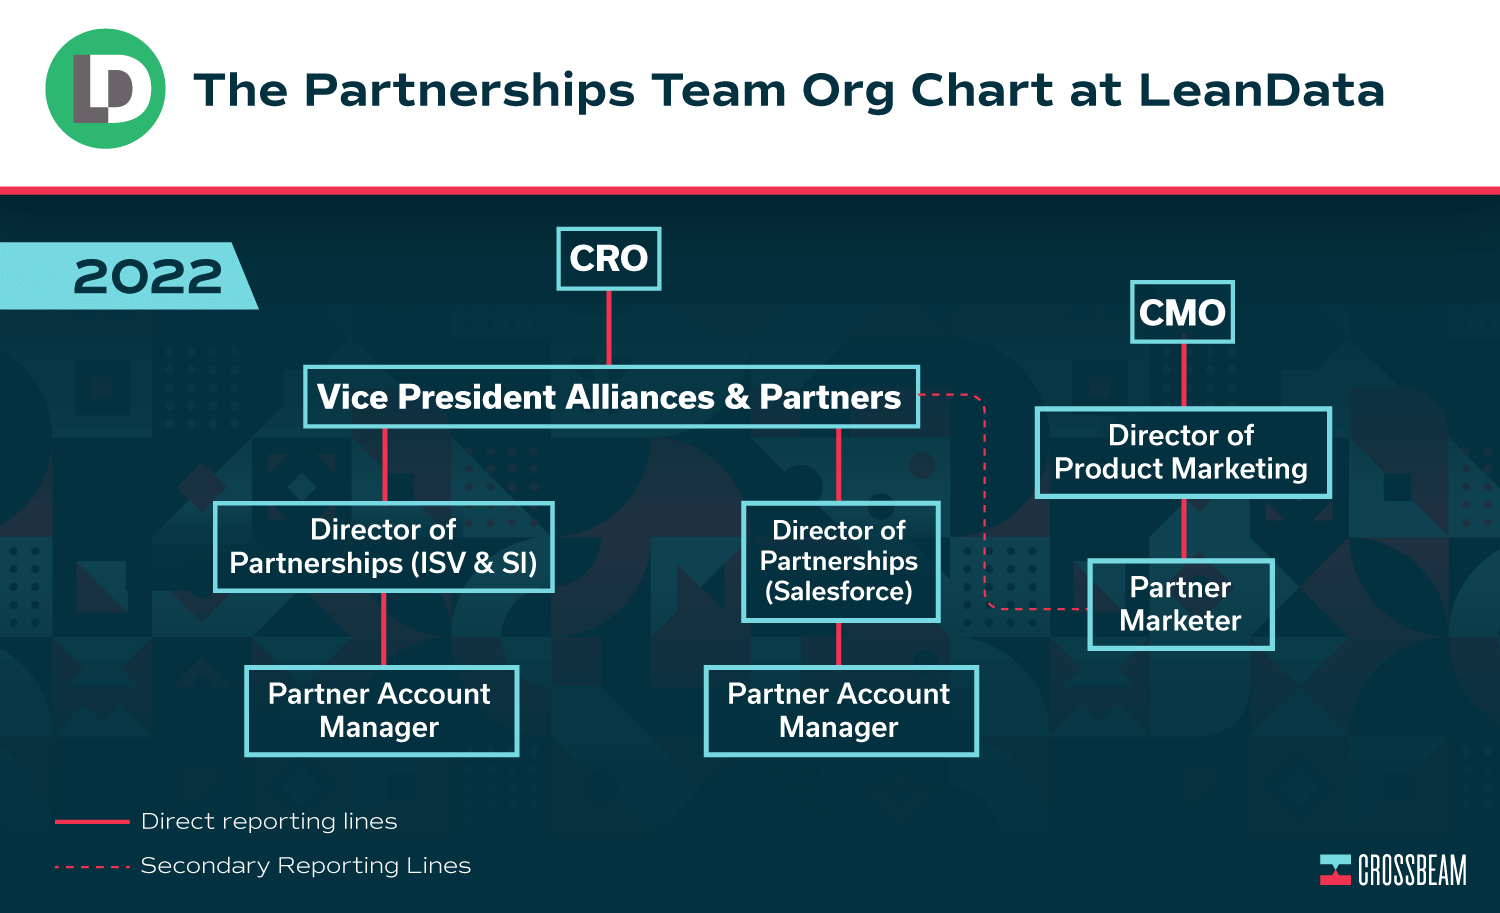 crossbeam-partnerships-team-org-charts-leandata